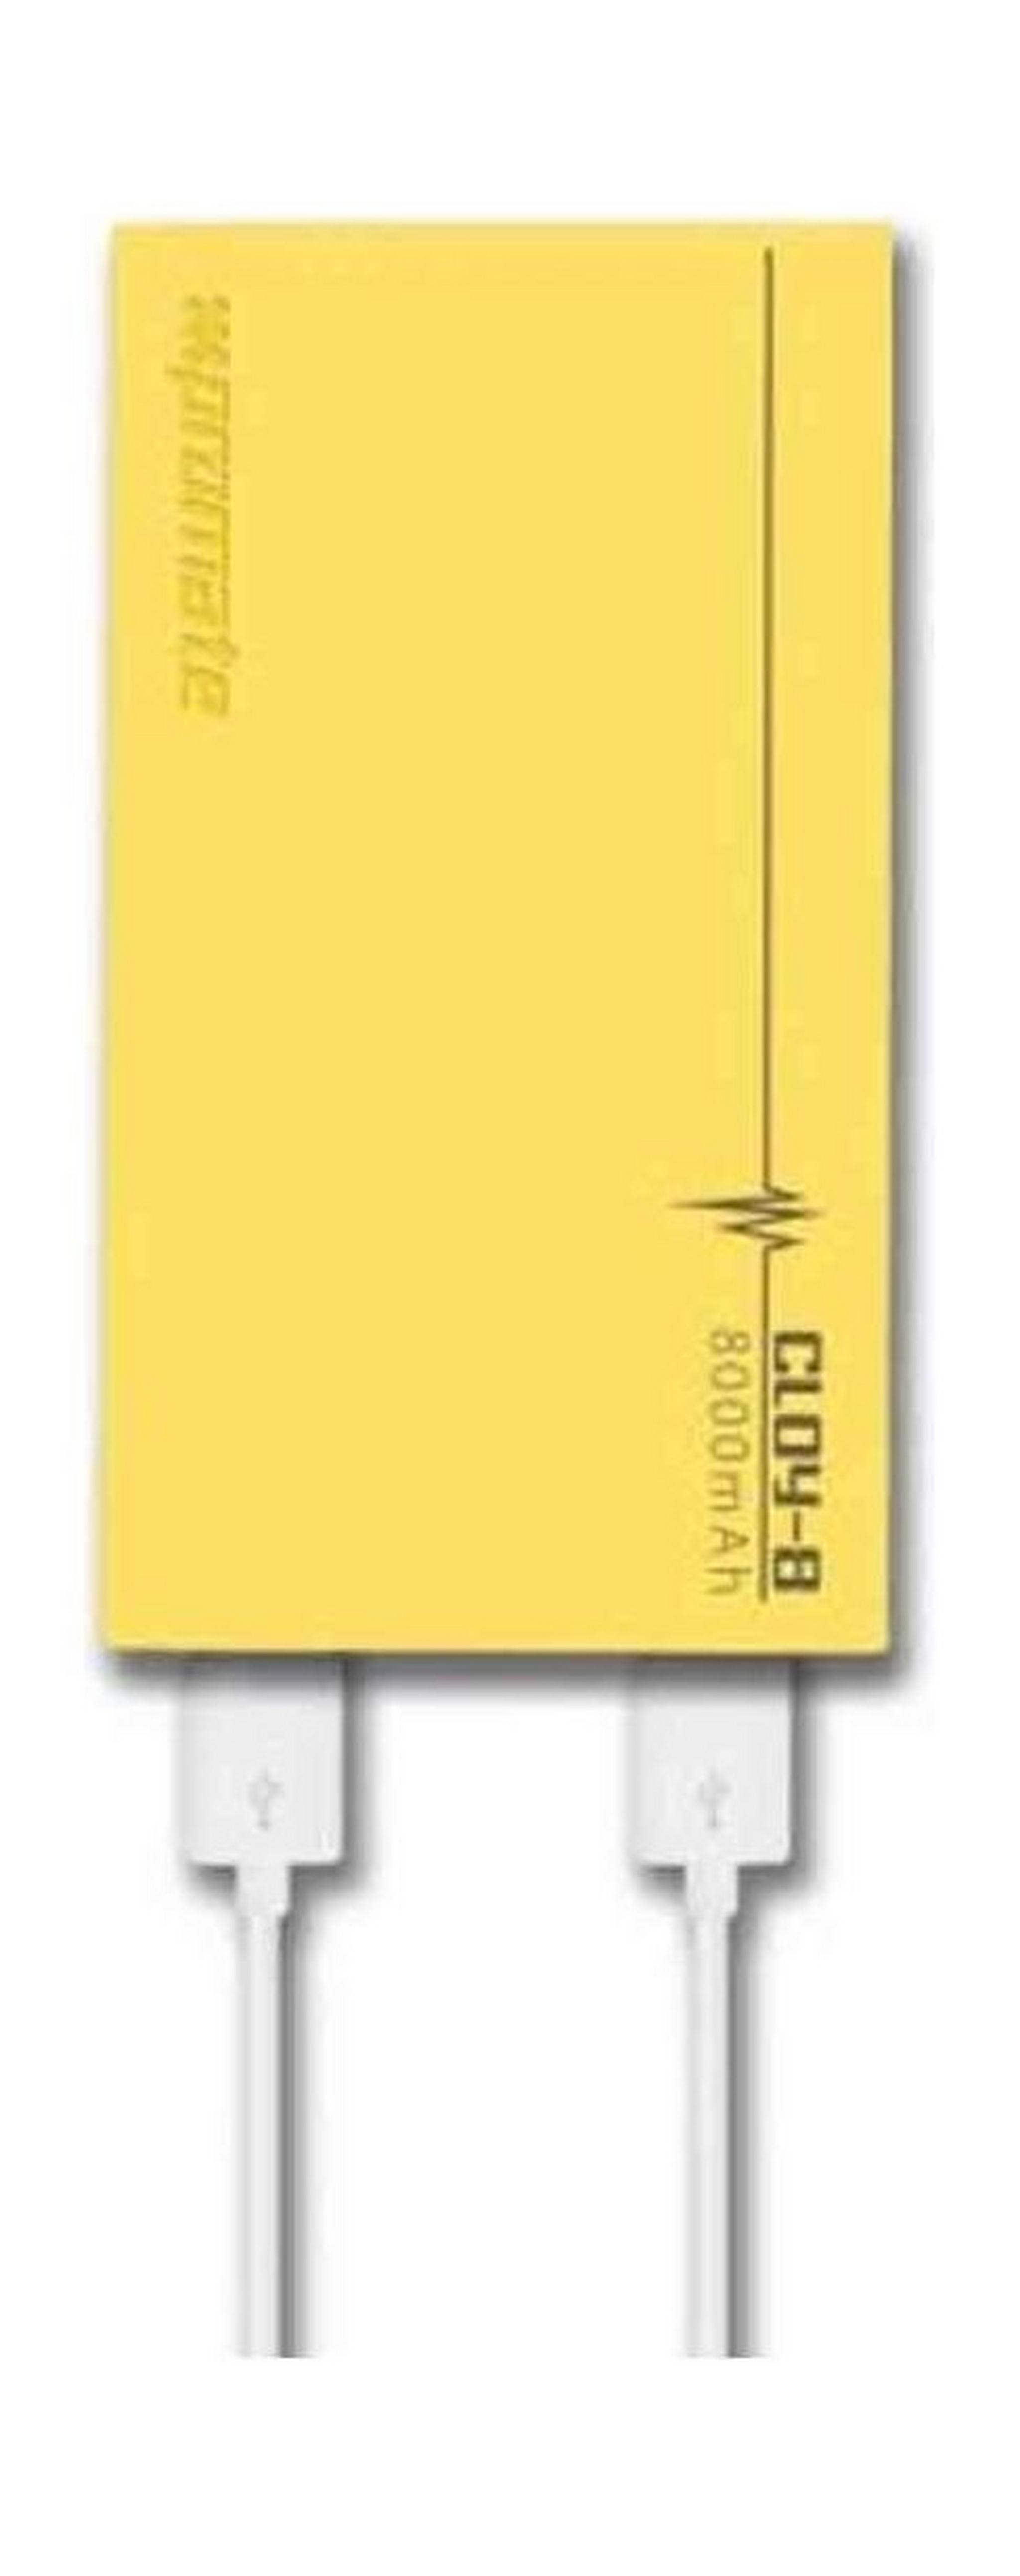 Promate Cloy-8 Premium Dual USB 8000mAh Power Bank - Yellow